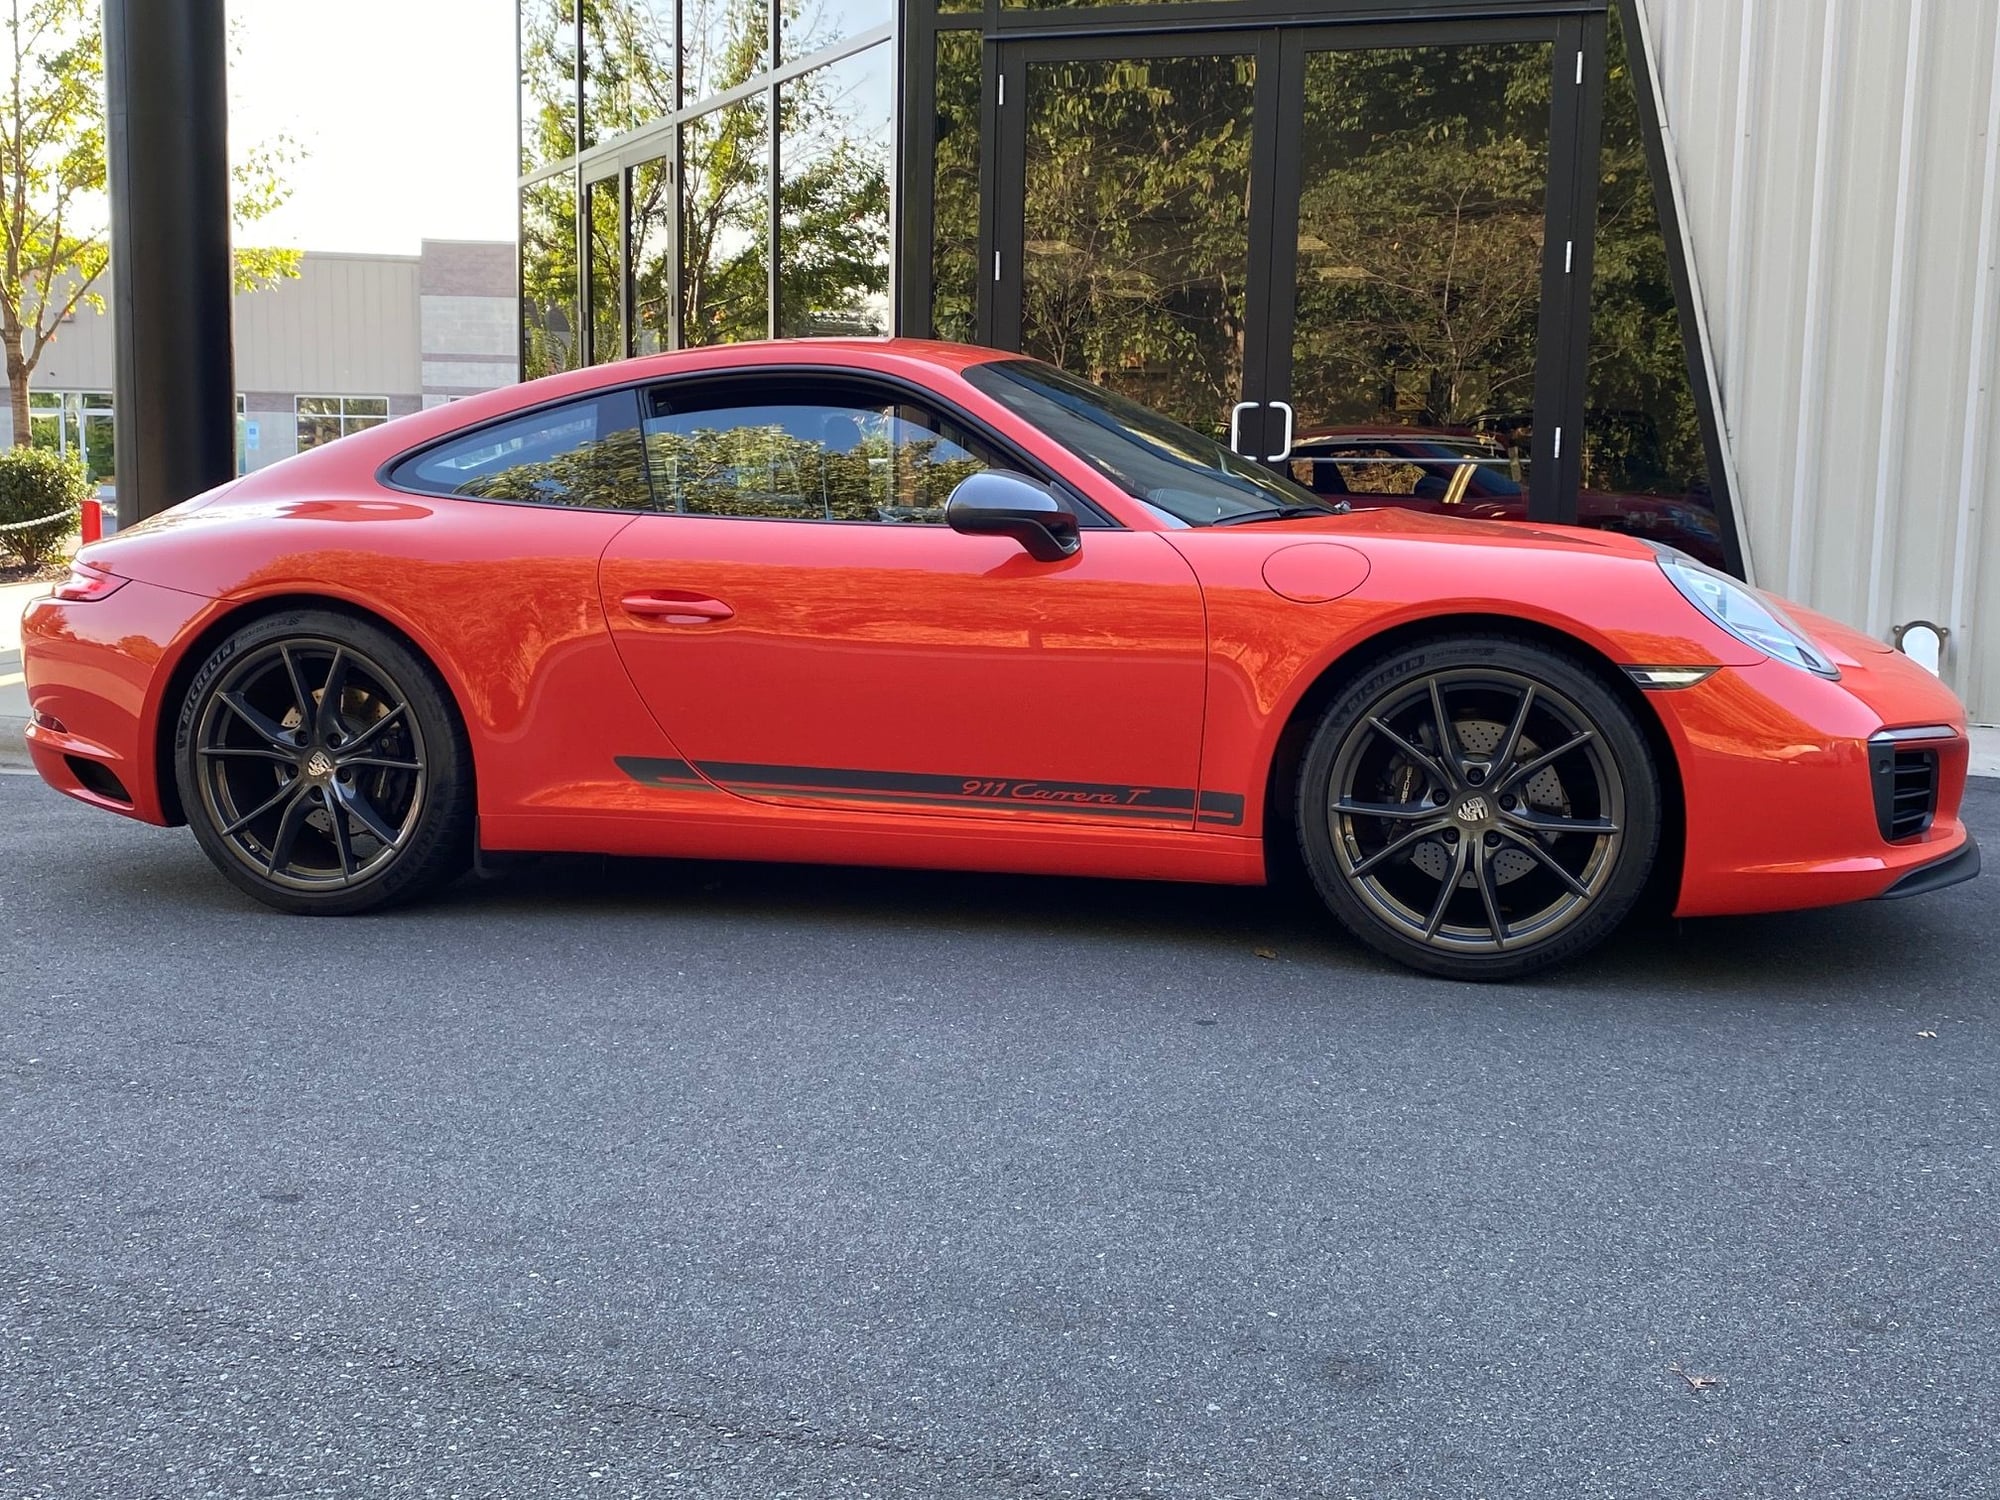 2018 Porsche 911 - 2018 Lava Orange Carrera T - 2200 mile 7 spd slicktop w/ LWB's! - Used - VIN WP0AA2A98JS106129 - 2,200 Miles - 6 cyl - 2WD - Manual - Coupe - Orange - Charlotte, NC 28210, United States